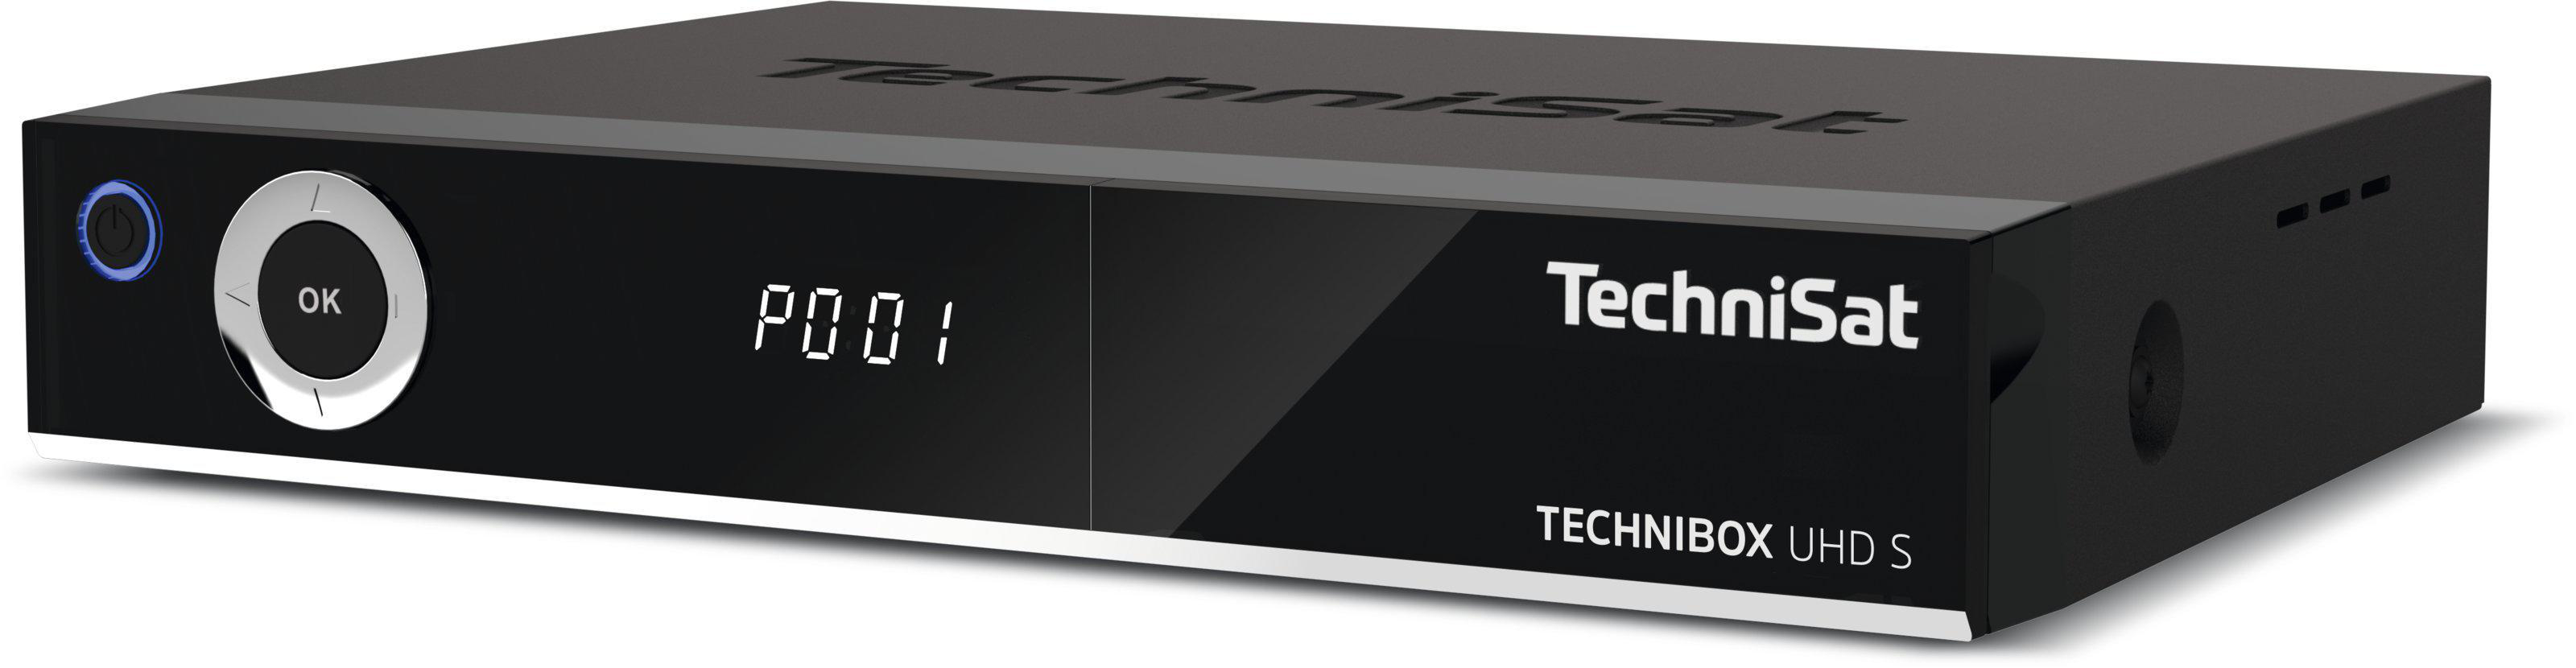 TECHNISAT TECHNIBOX UHD S Receiver DVB-S2, (PVR-Funktion, Tuner, DVB-S, Schwarz) Twin